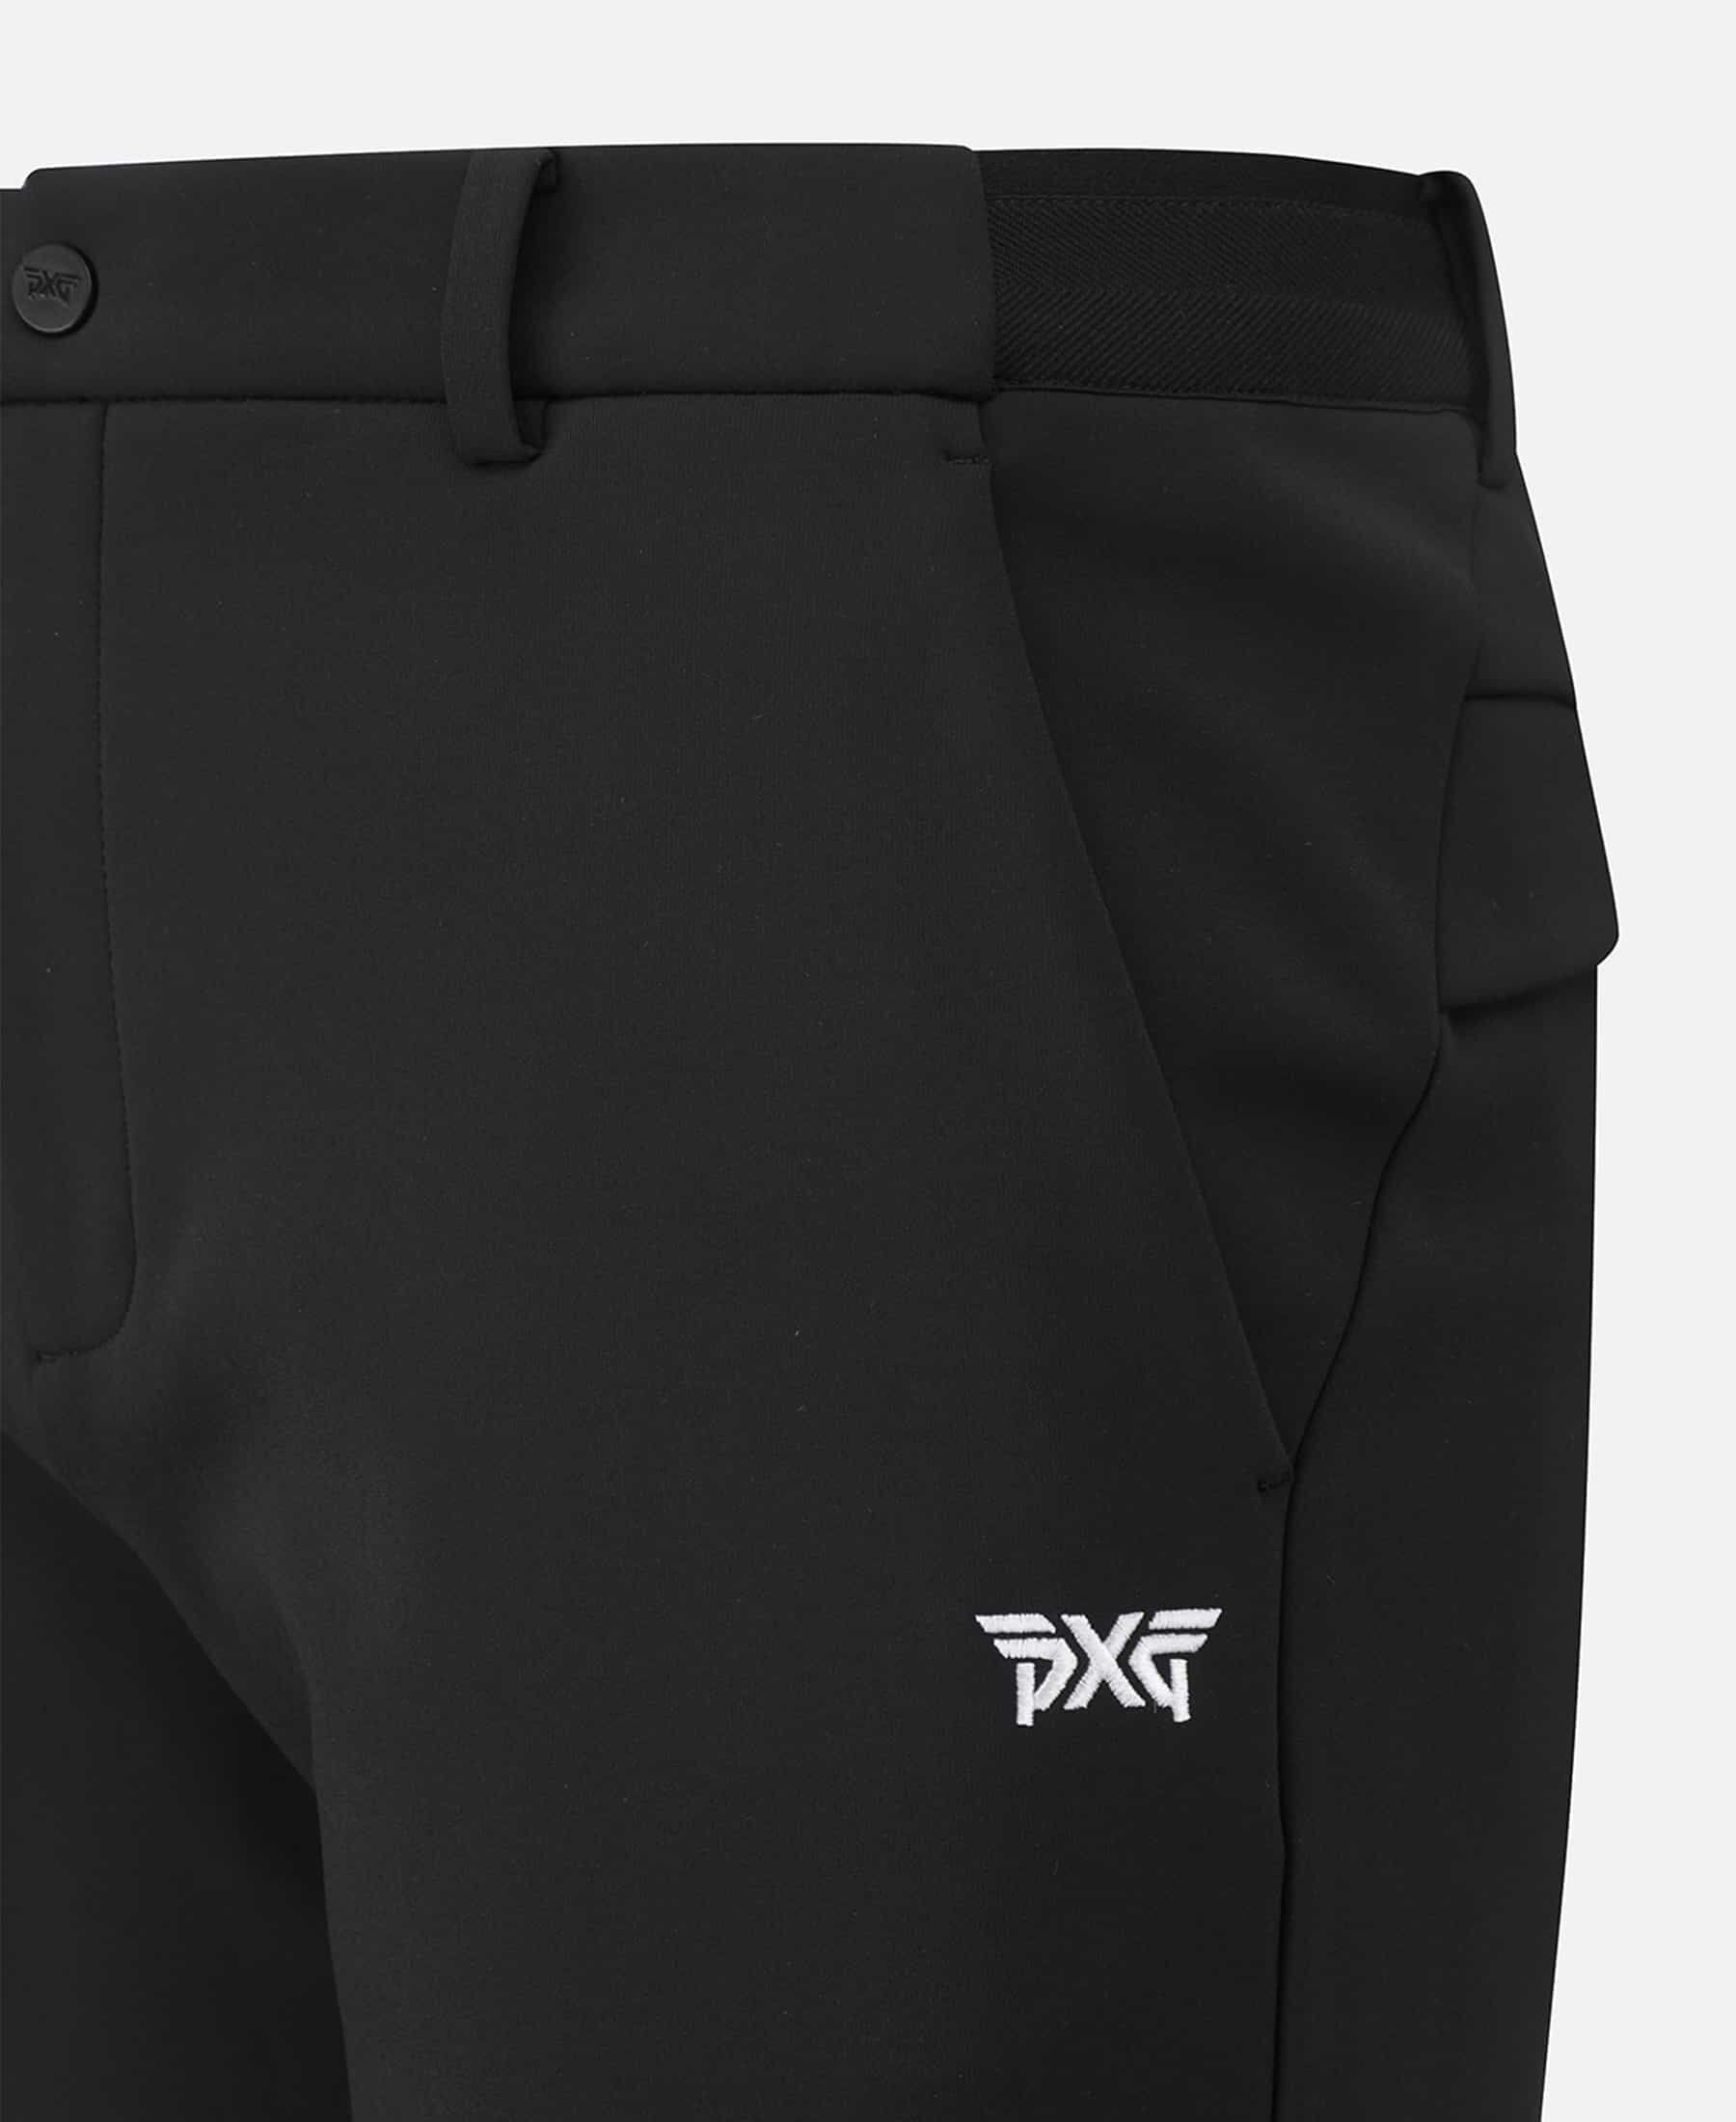 Shop Men's Golf Pants and Shorts   PXG JP